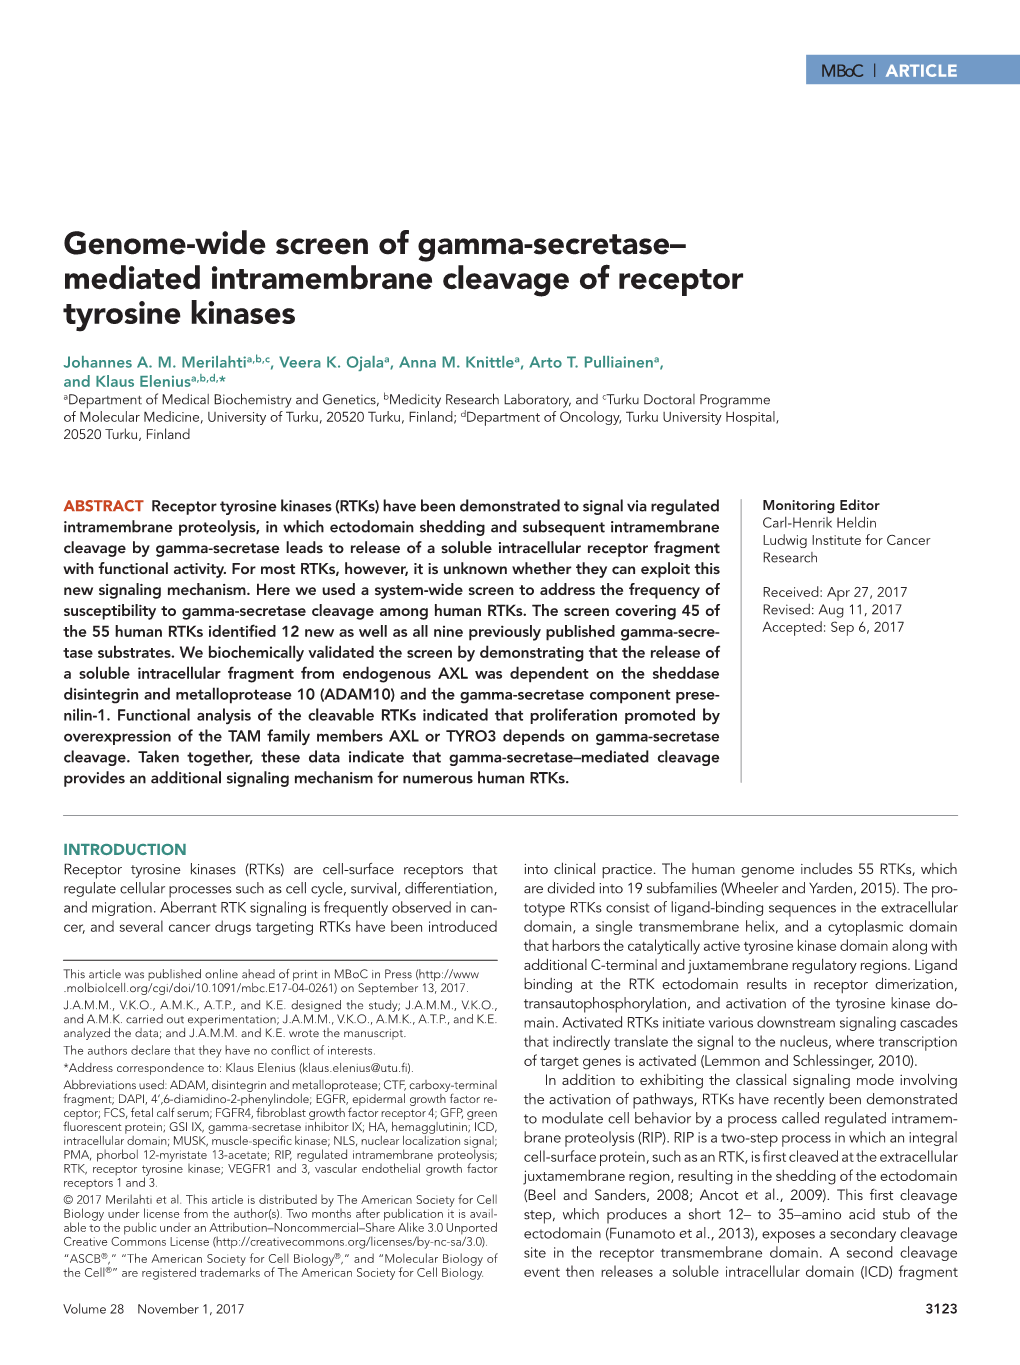 Genome-Wide Screen of Gamma-Secretase–Mediated Intramembrane Cleavage of Receptor Tyrosine Kinases